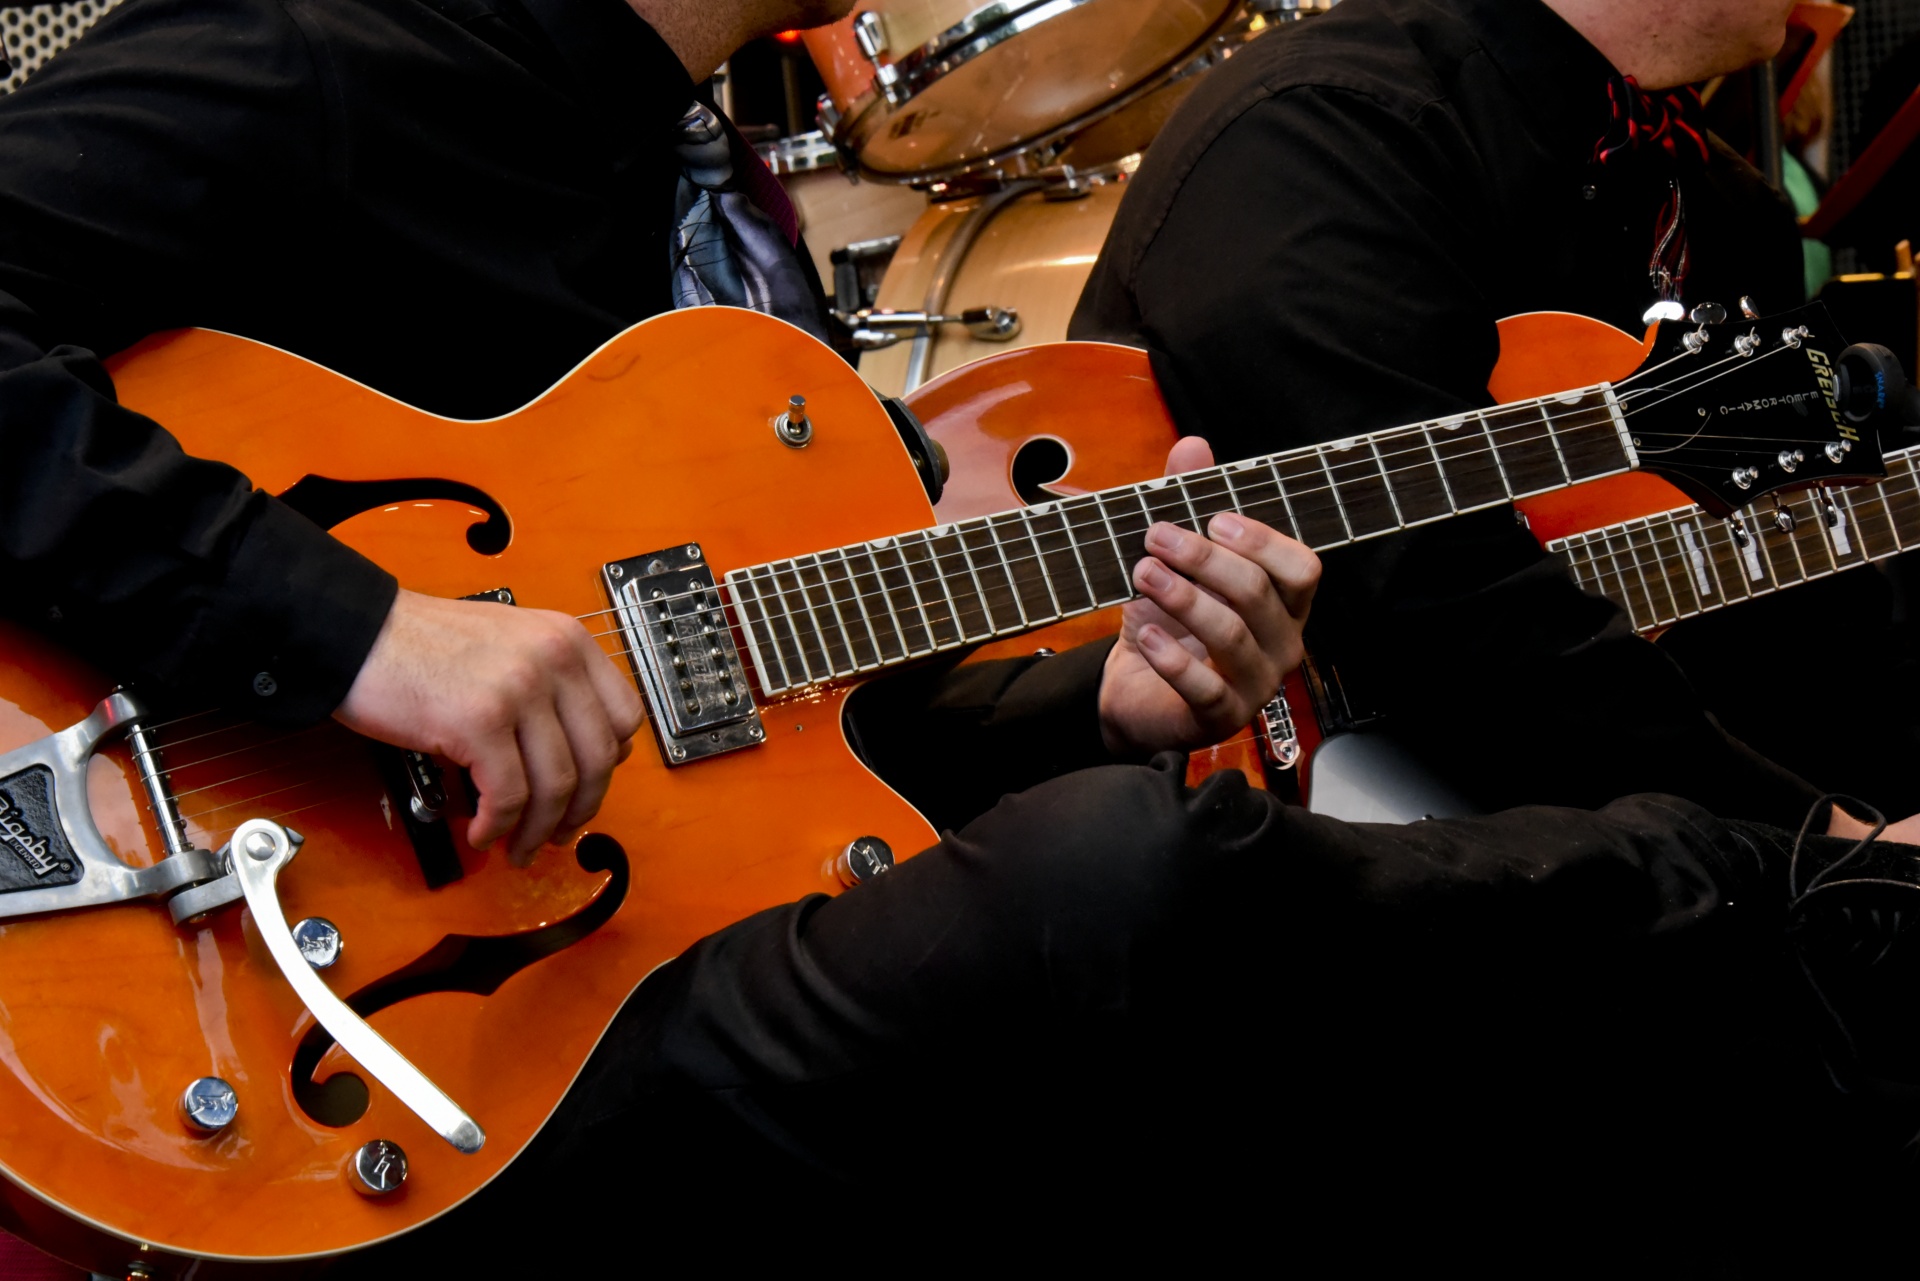 Young man playing a orange Gibson guitar